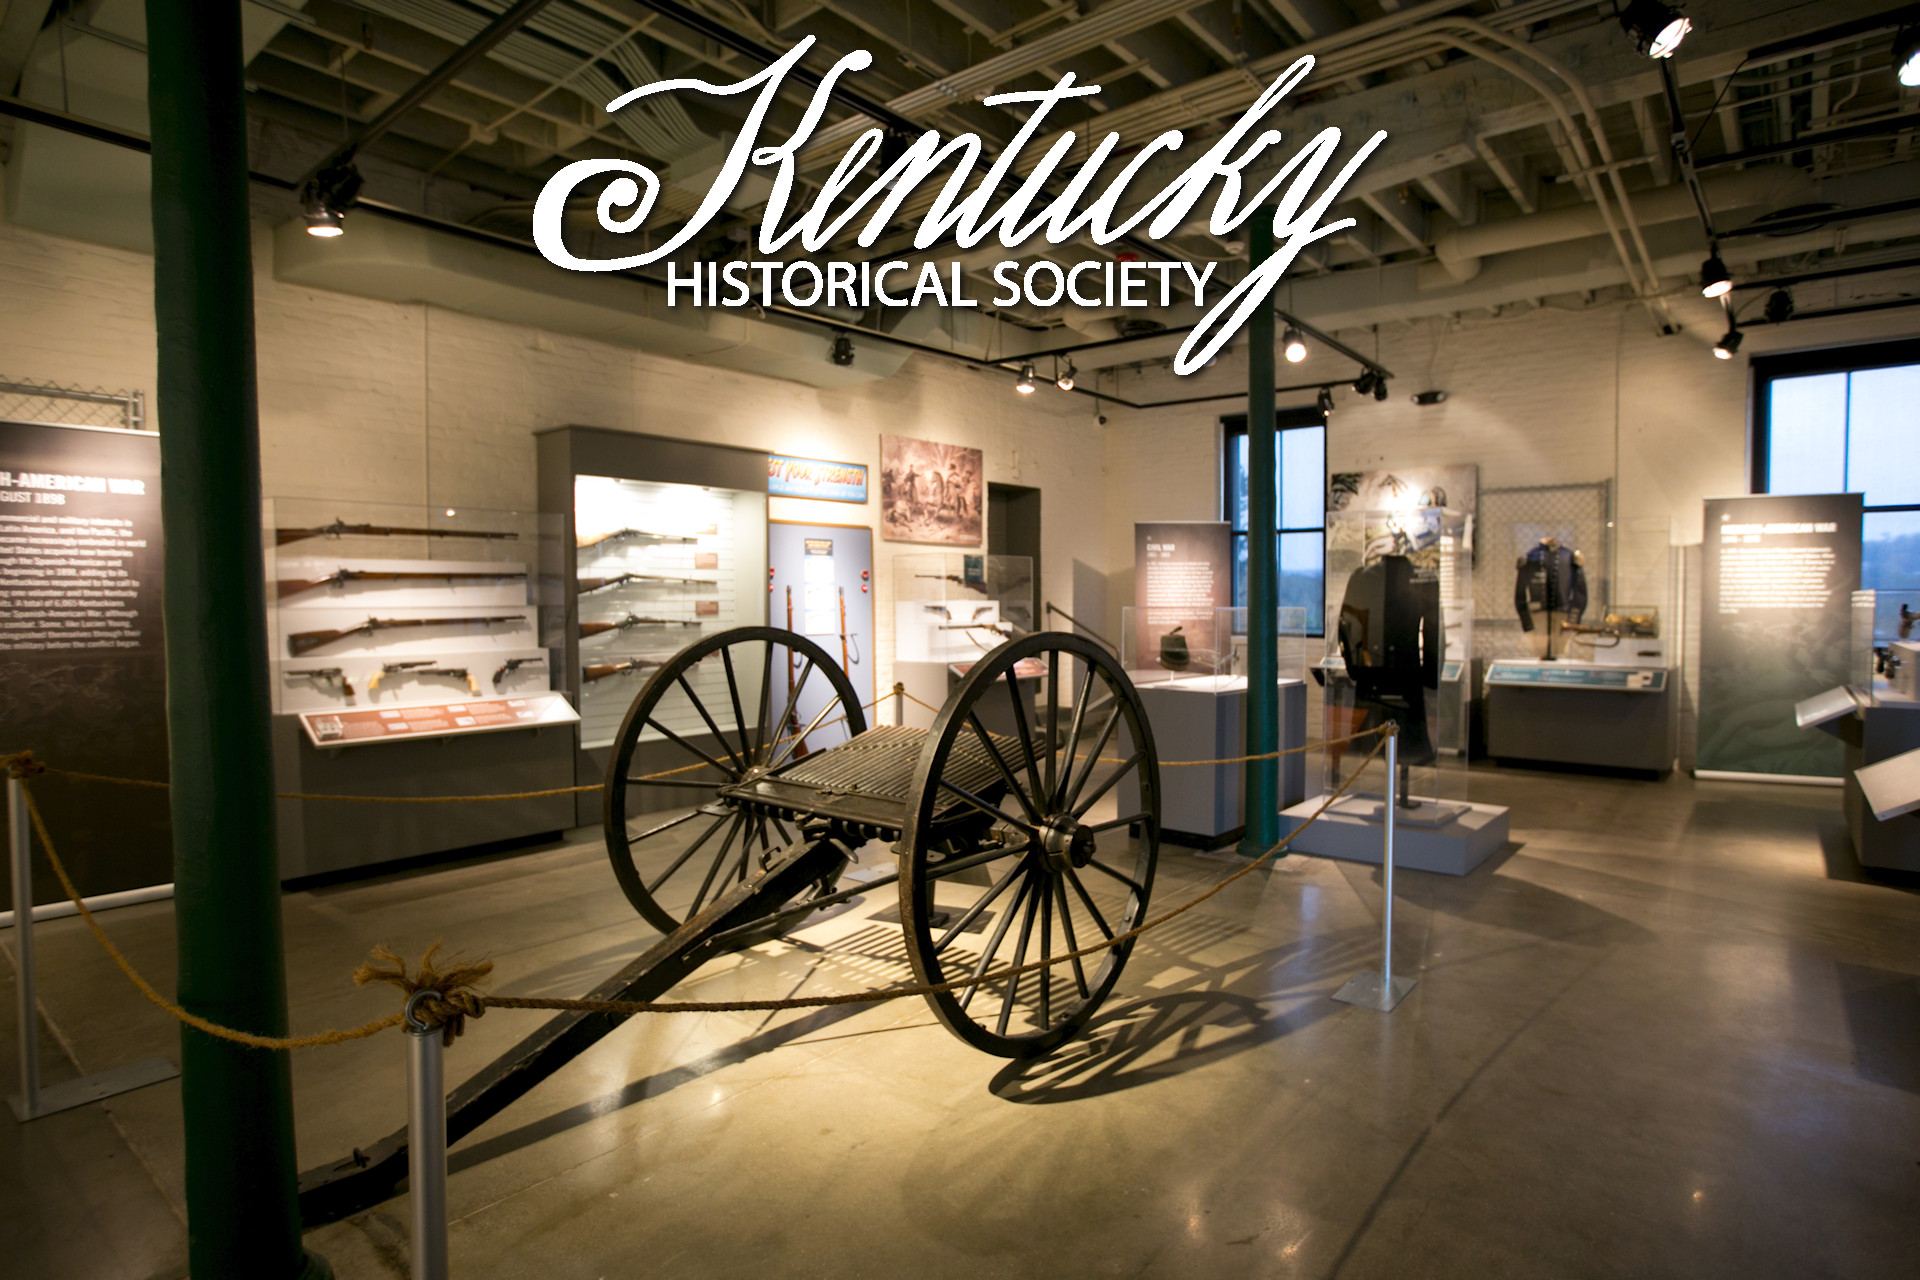 Kentucky History Museum